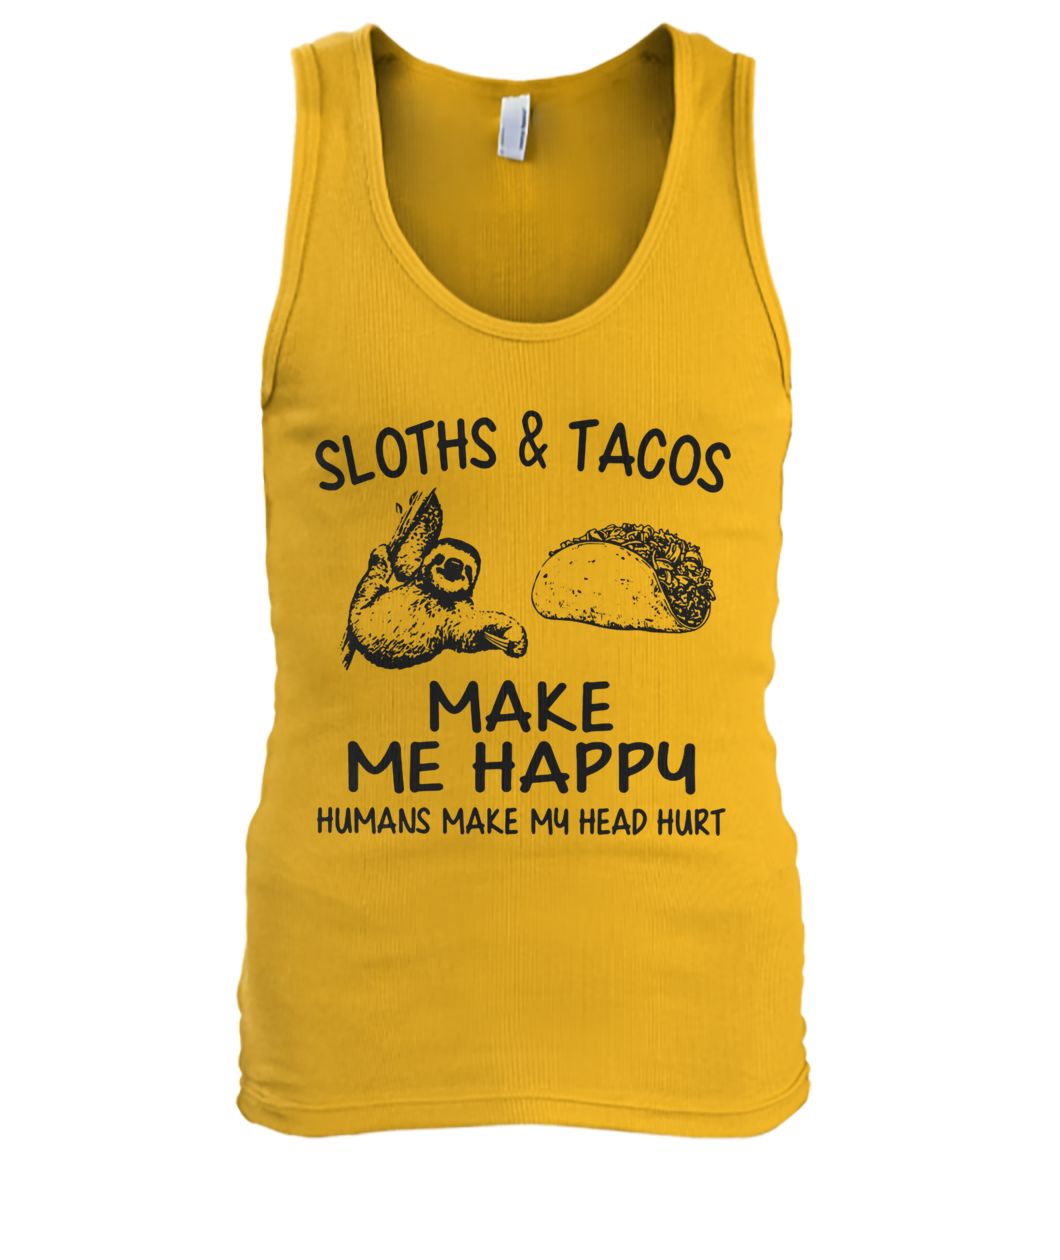 Sloths and tacos make me happy humans make my head hurt men's tank top